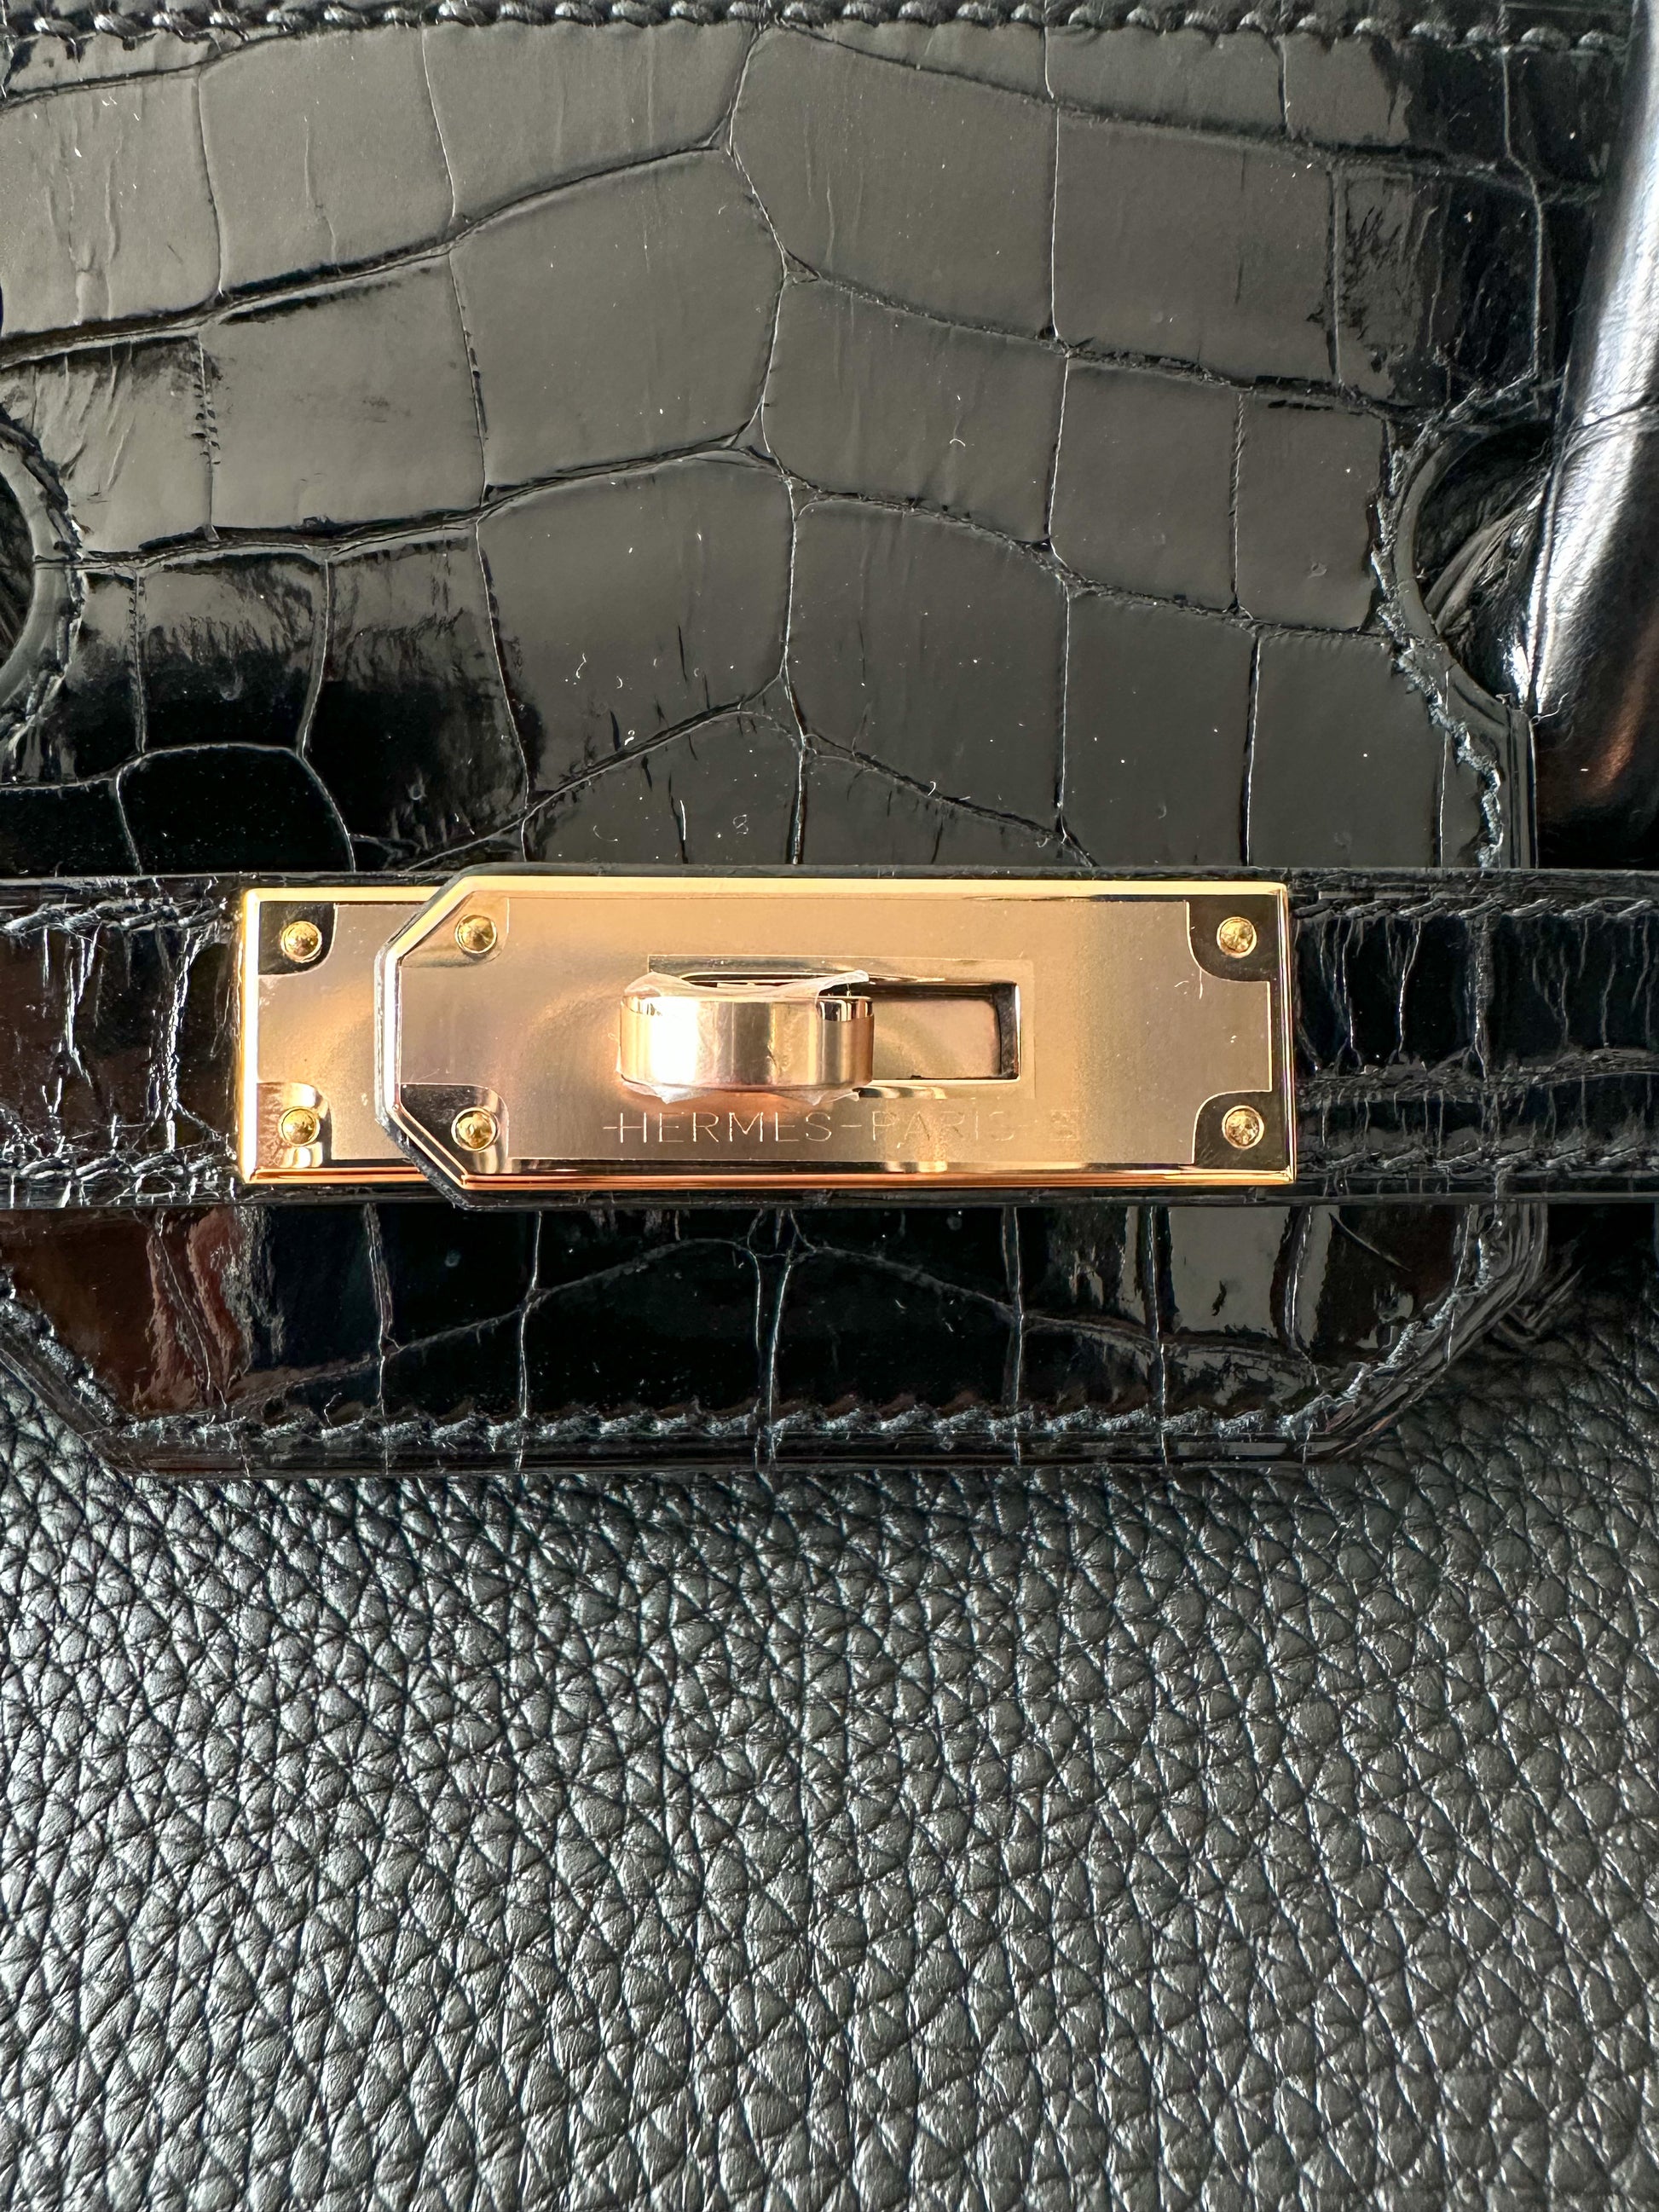 Hermes 'Black Matte Crocodile Birkin 30' Bag